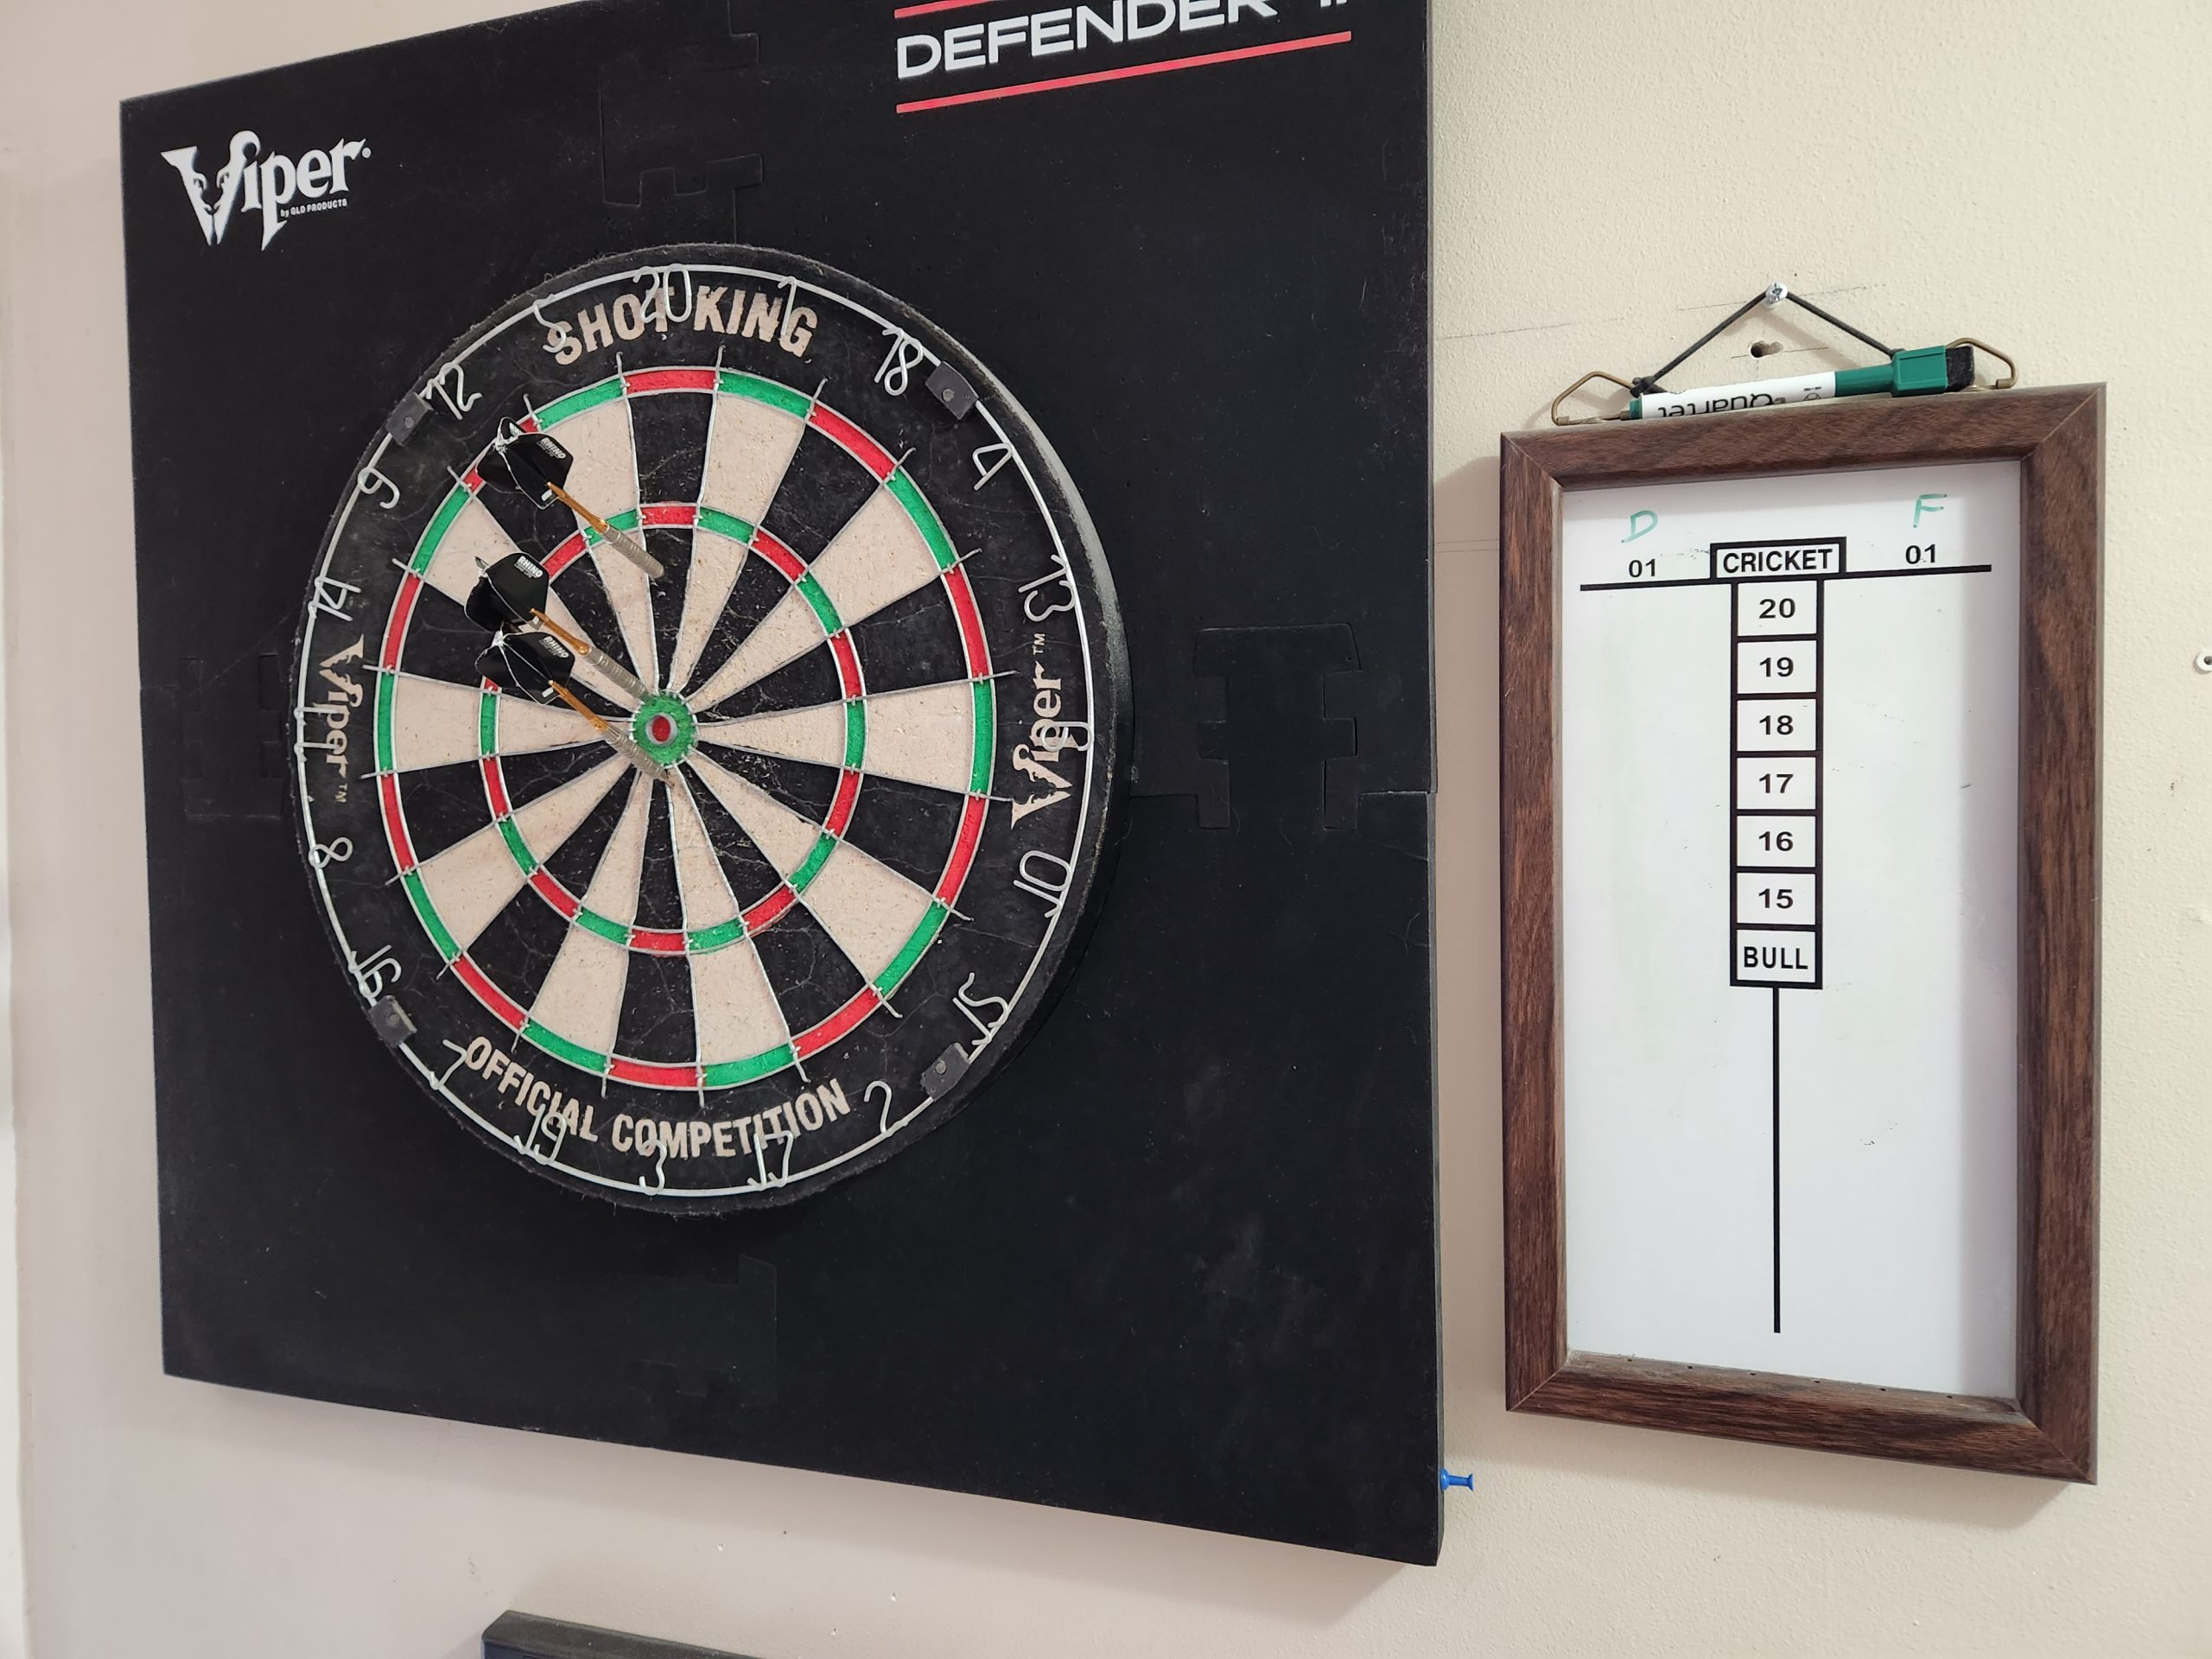 Dartboard with darts and cricket score board